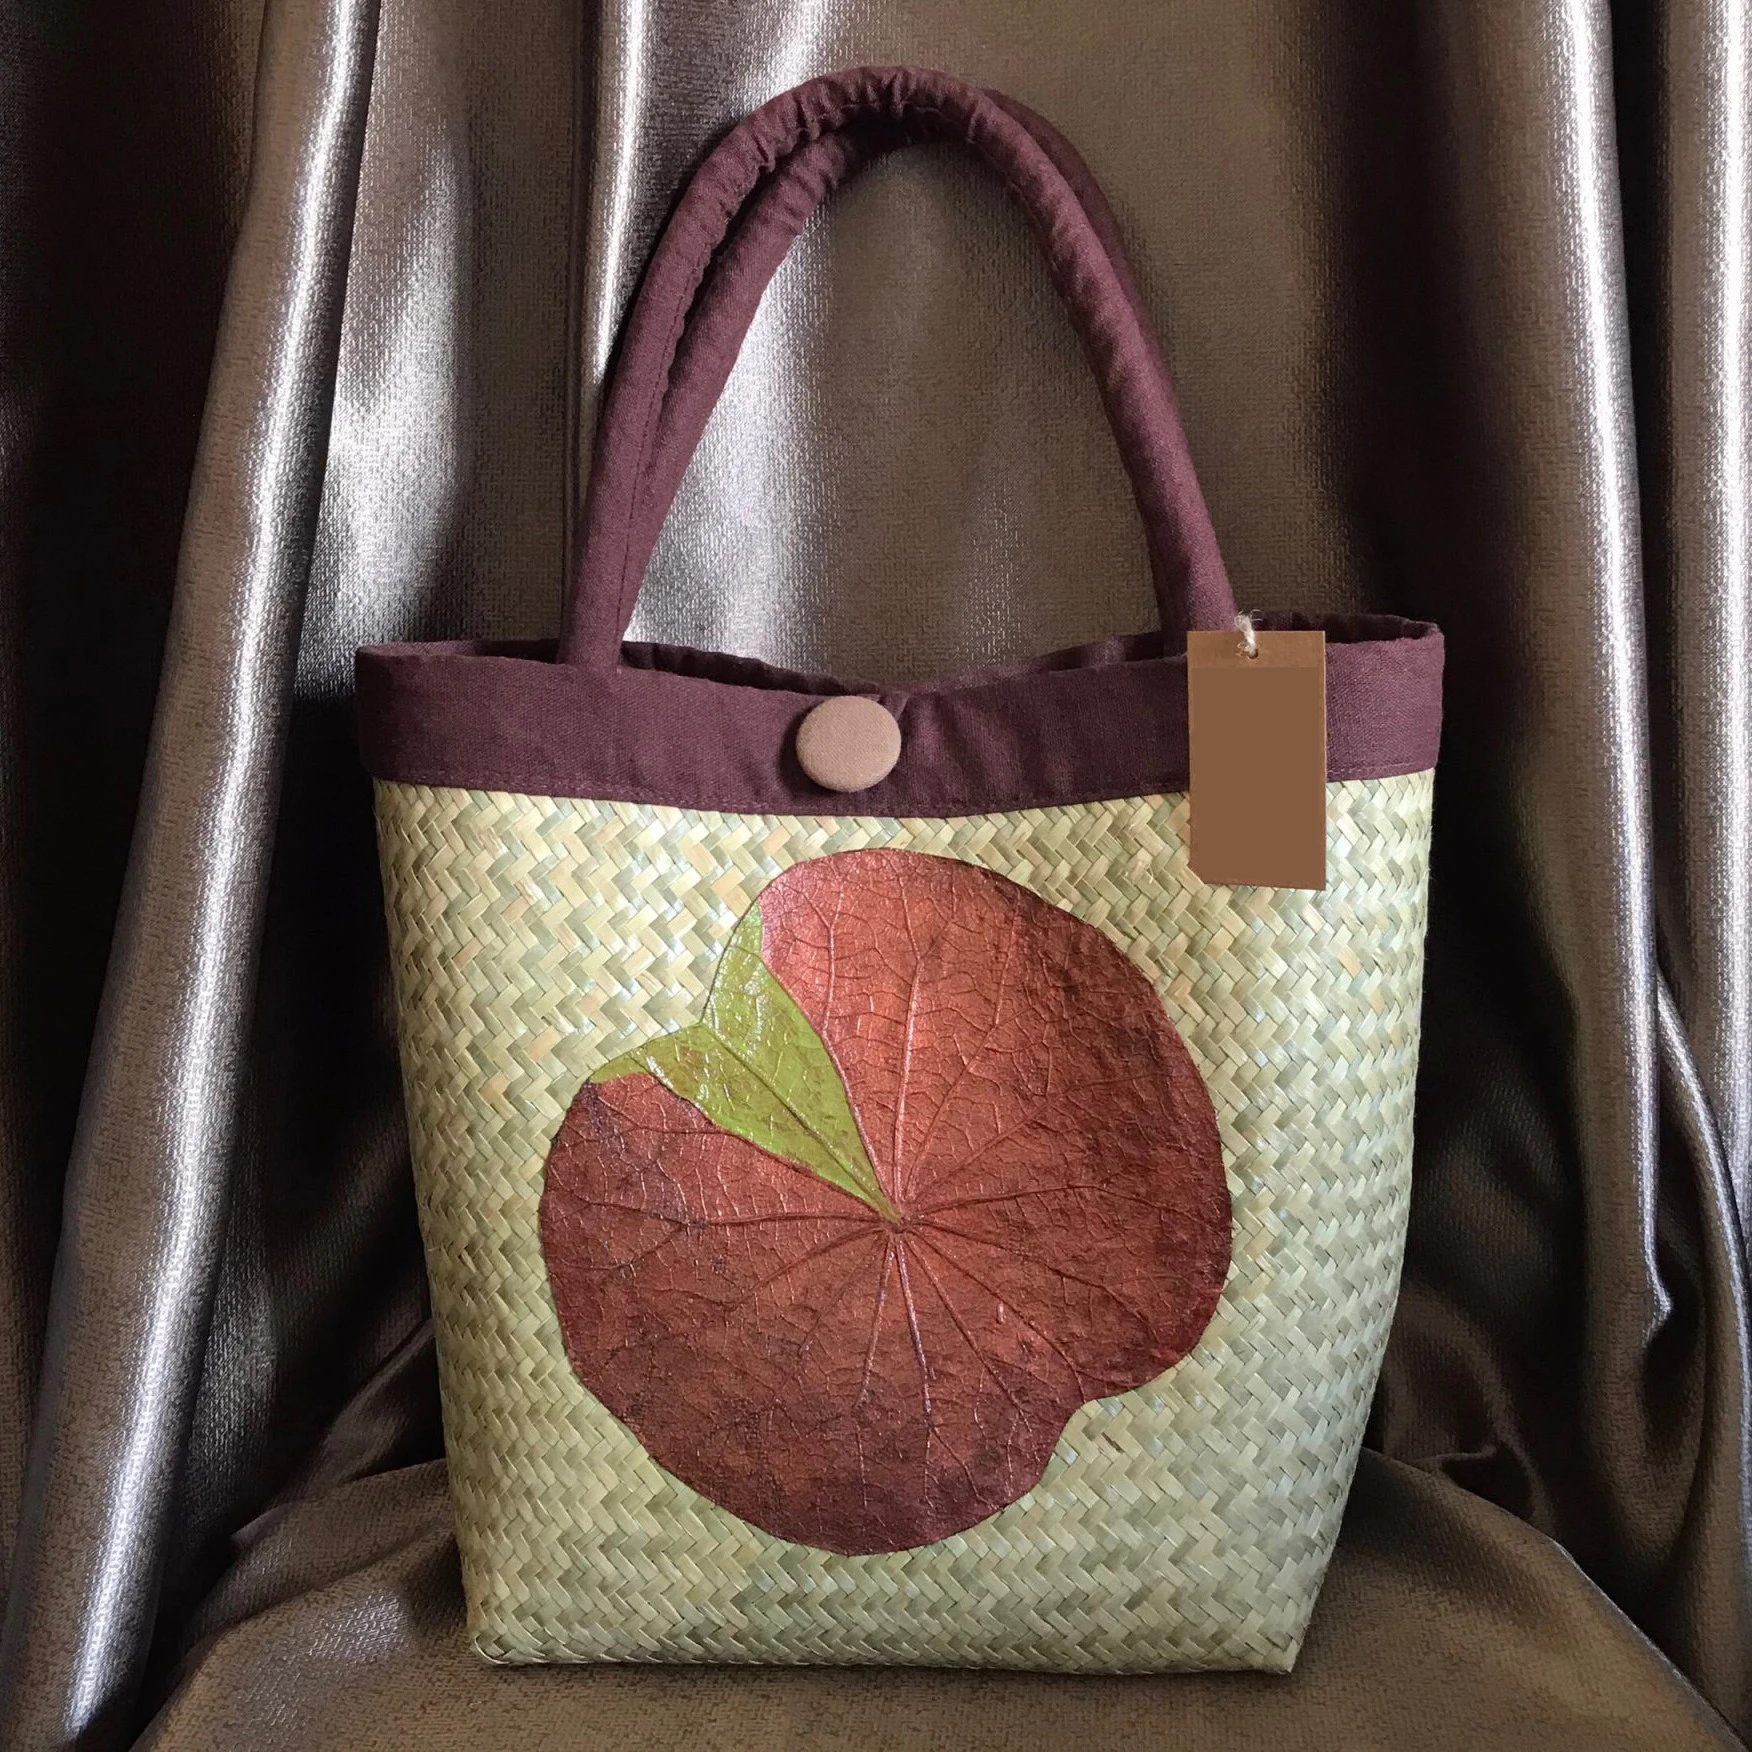 New design sedge handbag on sale 38